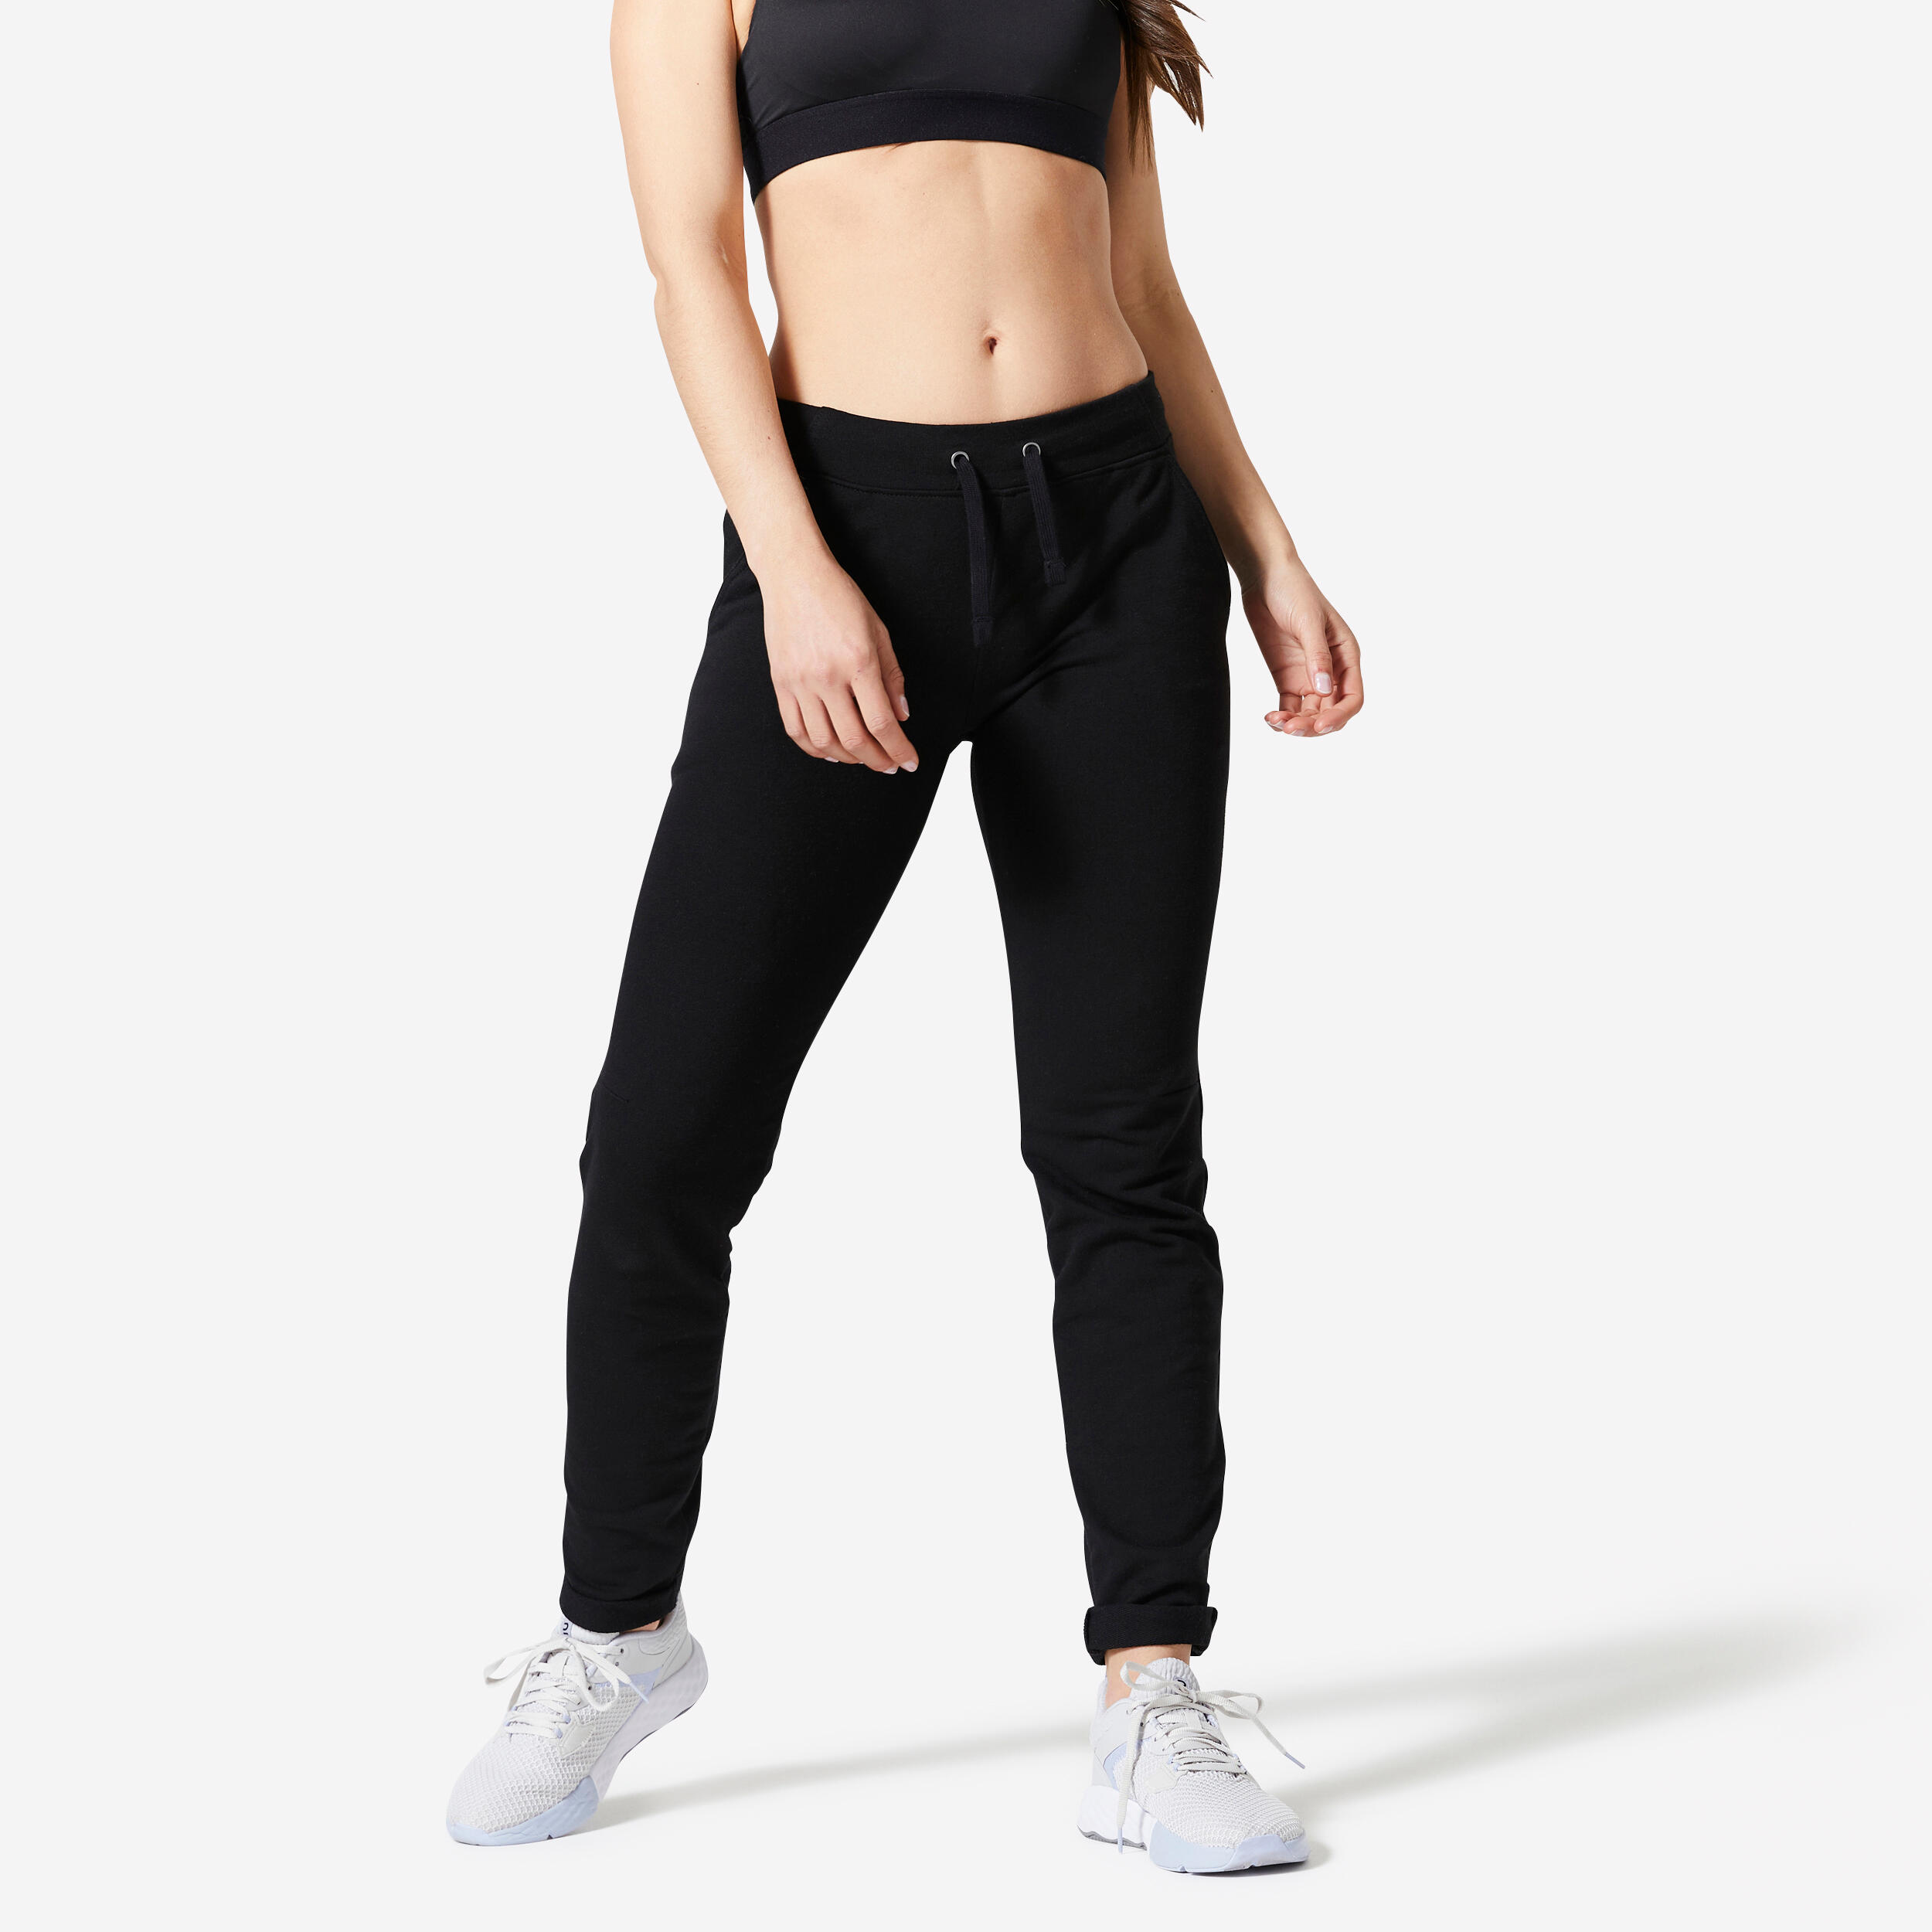 Women's Slim-Fit Fitness Jogging Bottoms 500 - Black 1/5